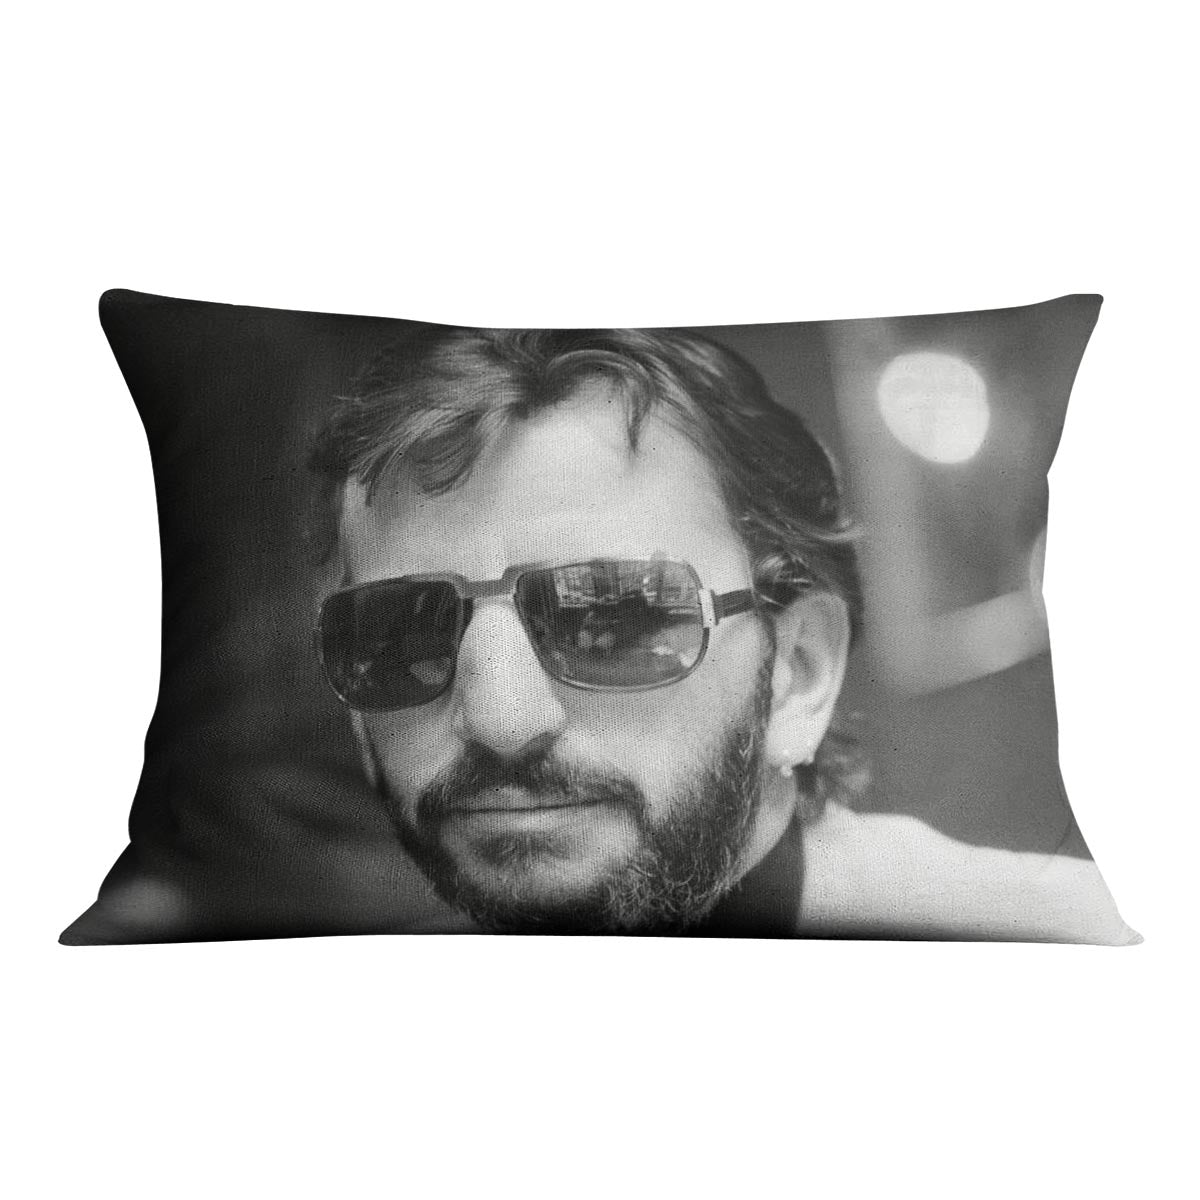 Ringo Starr former Beatle Cushion